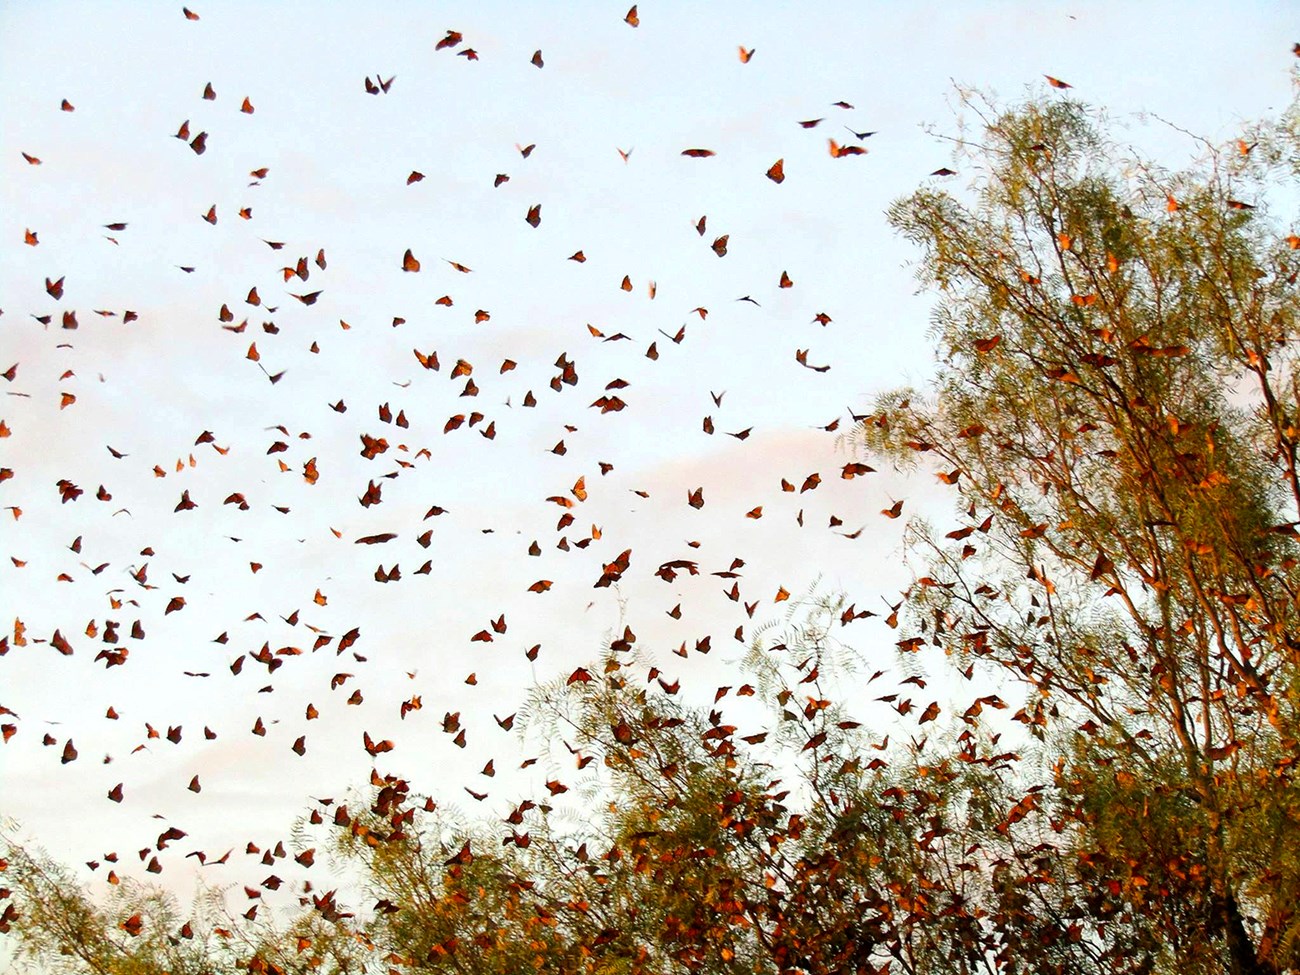 Monarch migration. Hundreds of monarchs fly past green vegetation.